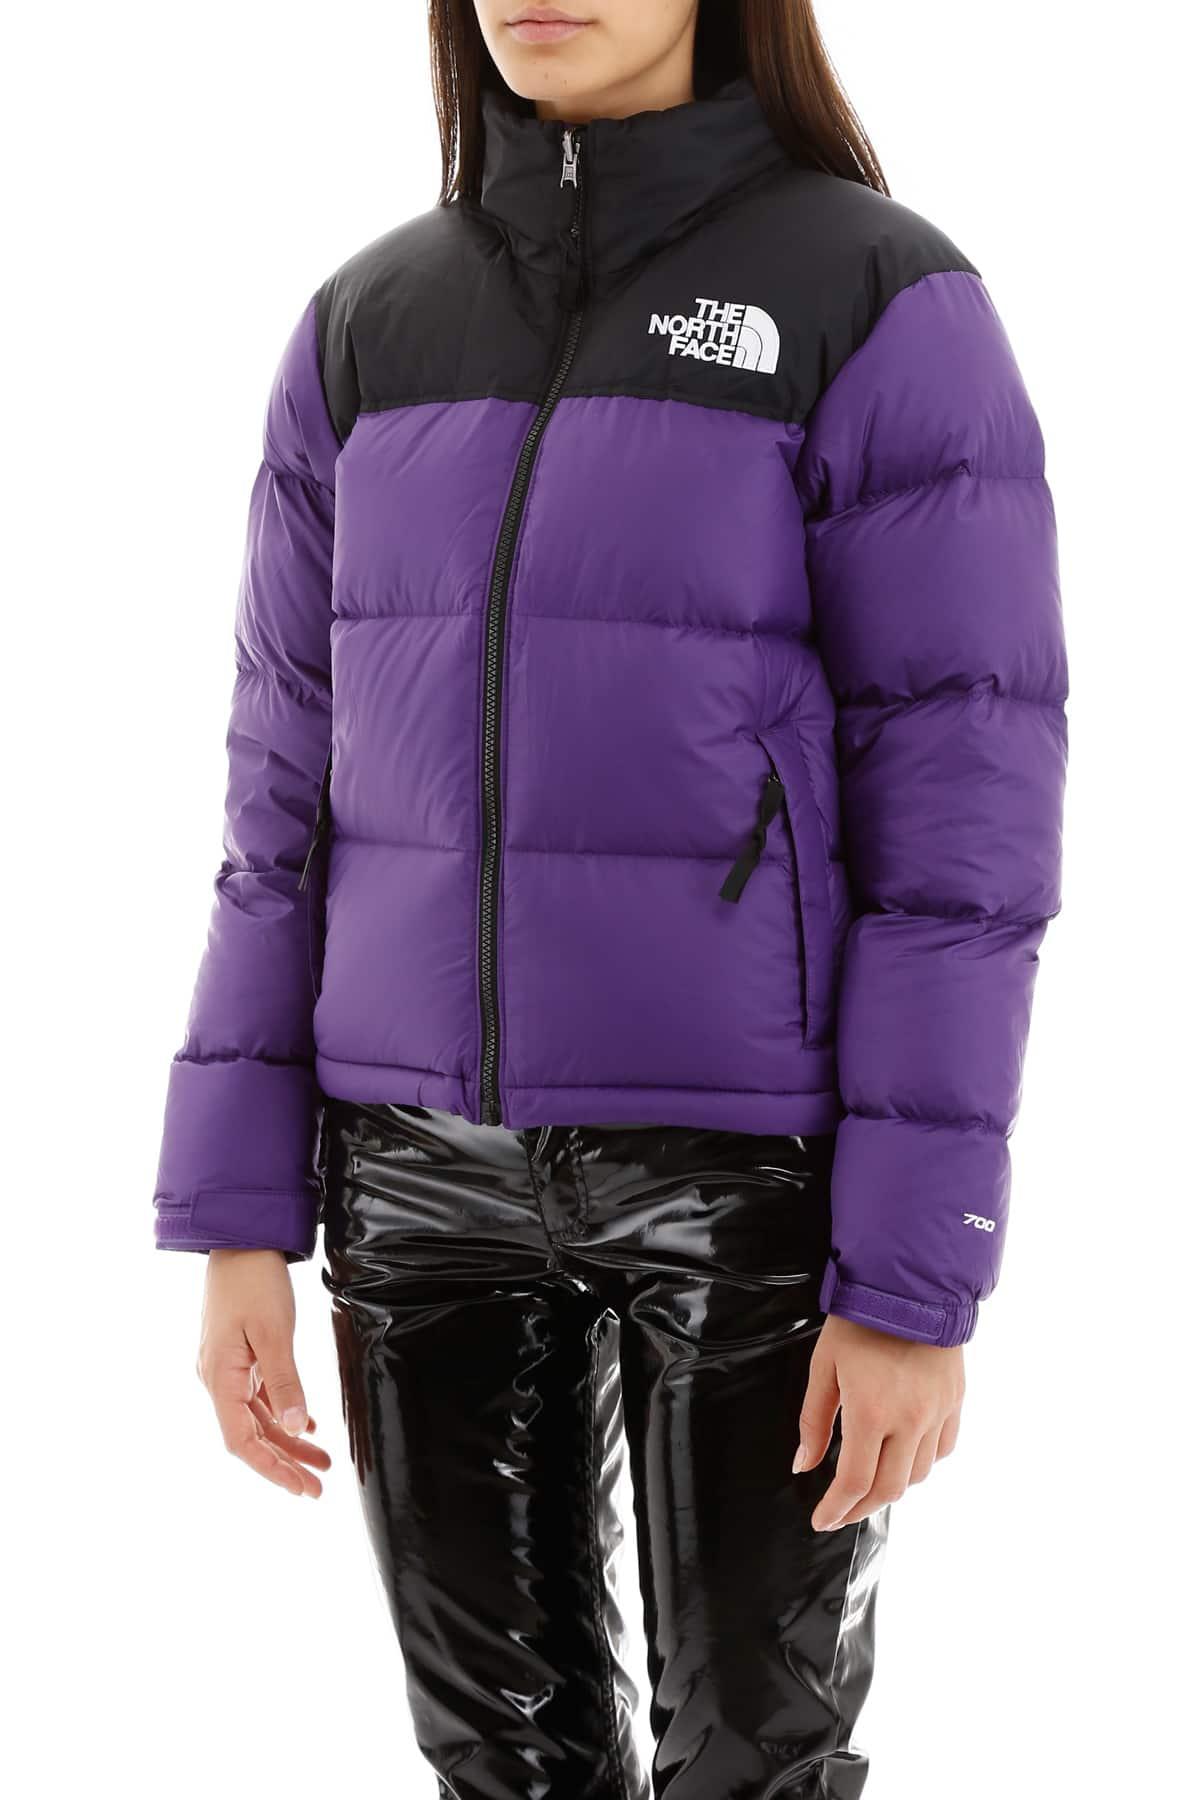 face 1996 retro nuptse jacket purple 